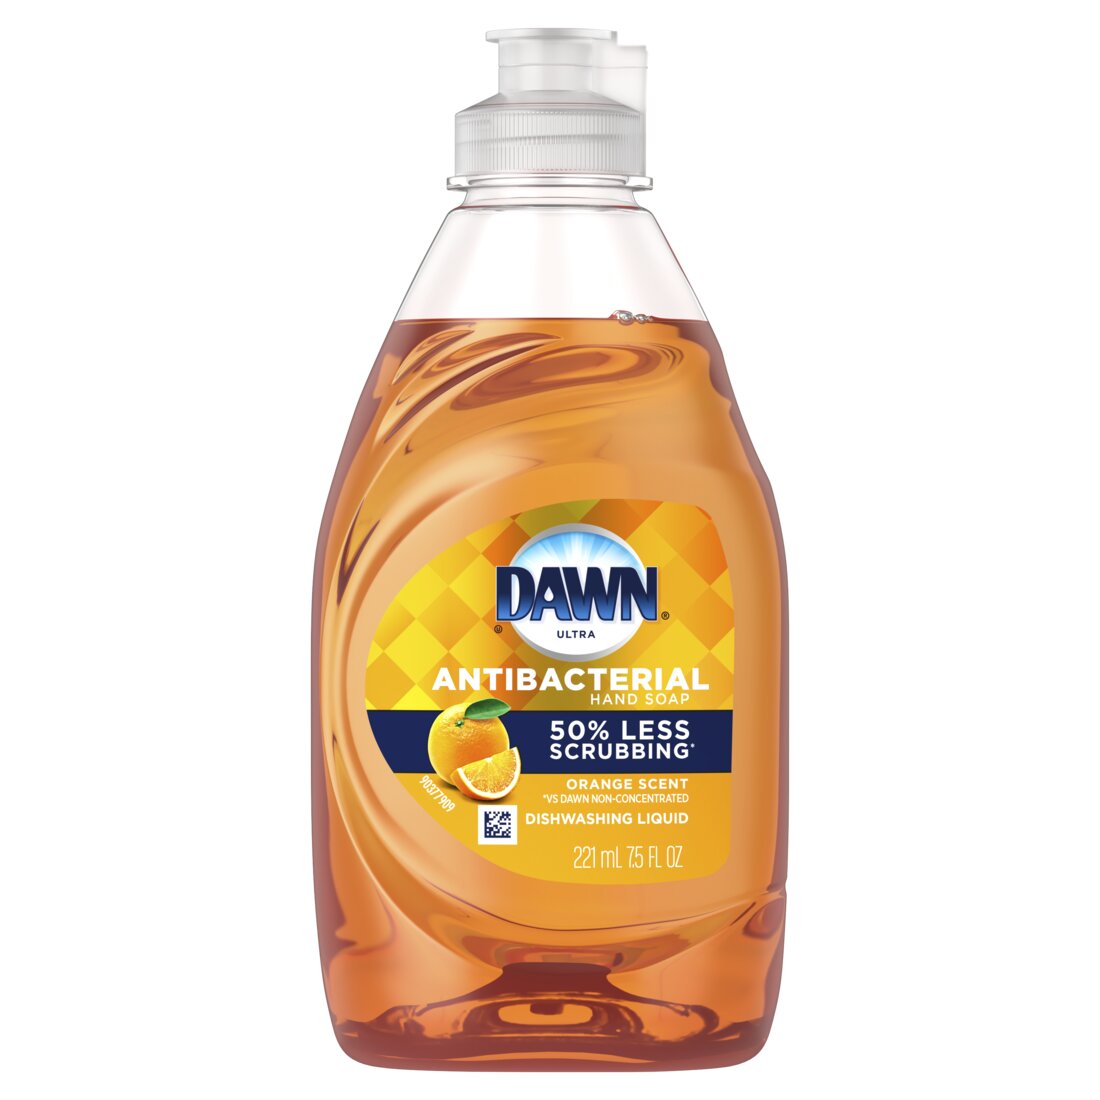 Dawn Ultra Antibacterial Dishwashing Liquid Dish Soap Orange Scent - 7.5oz/18pk